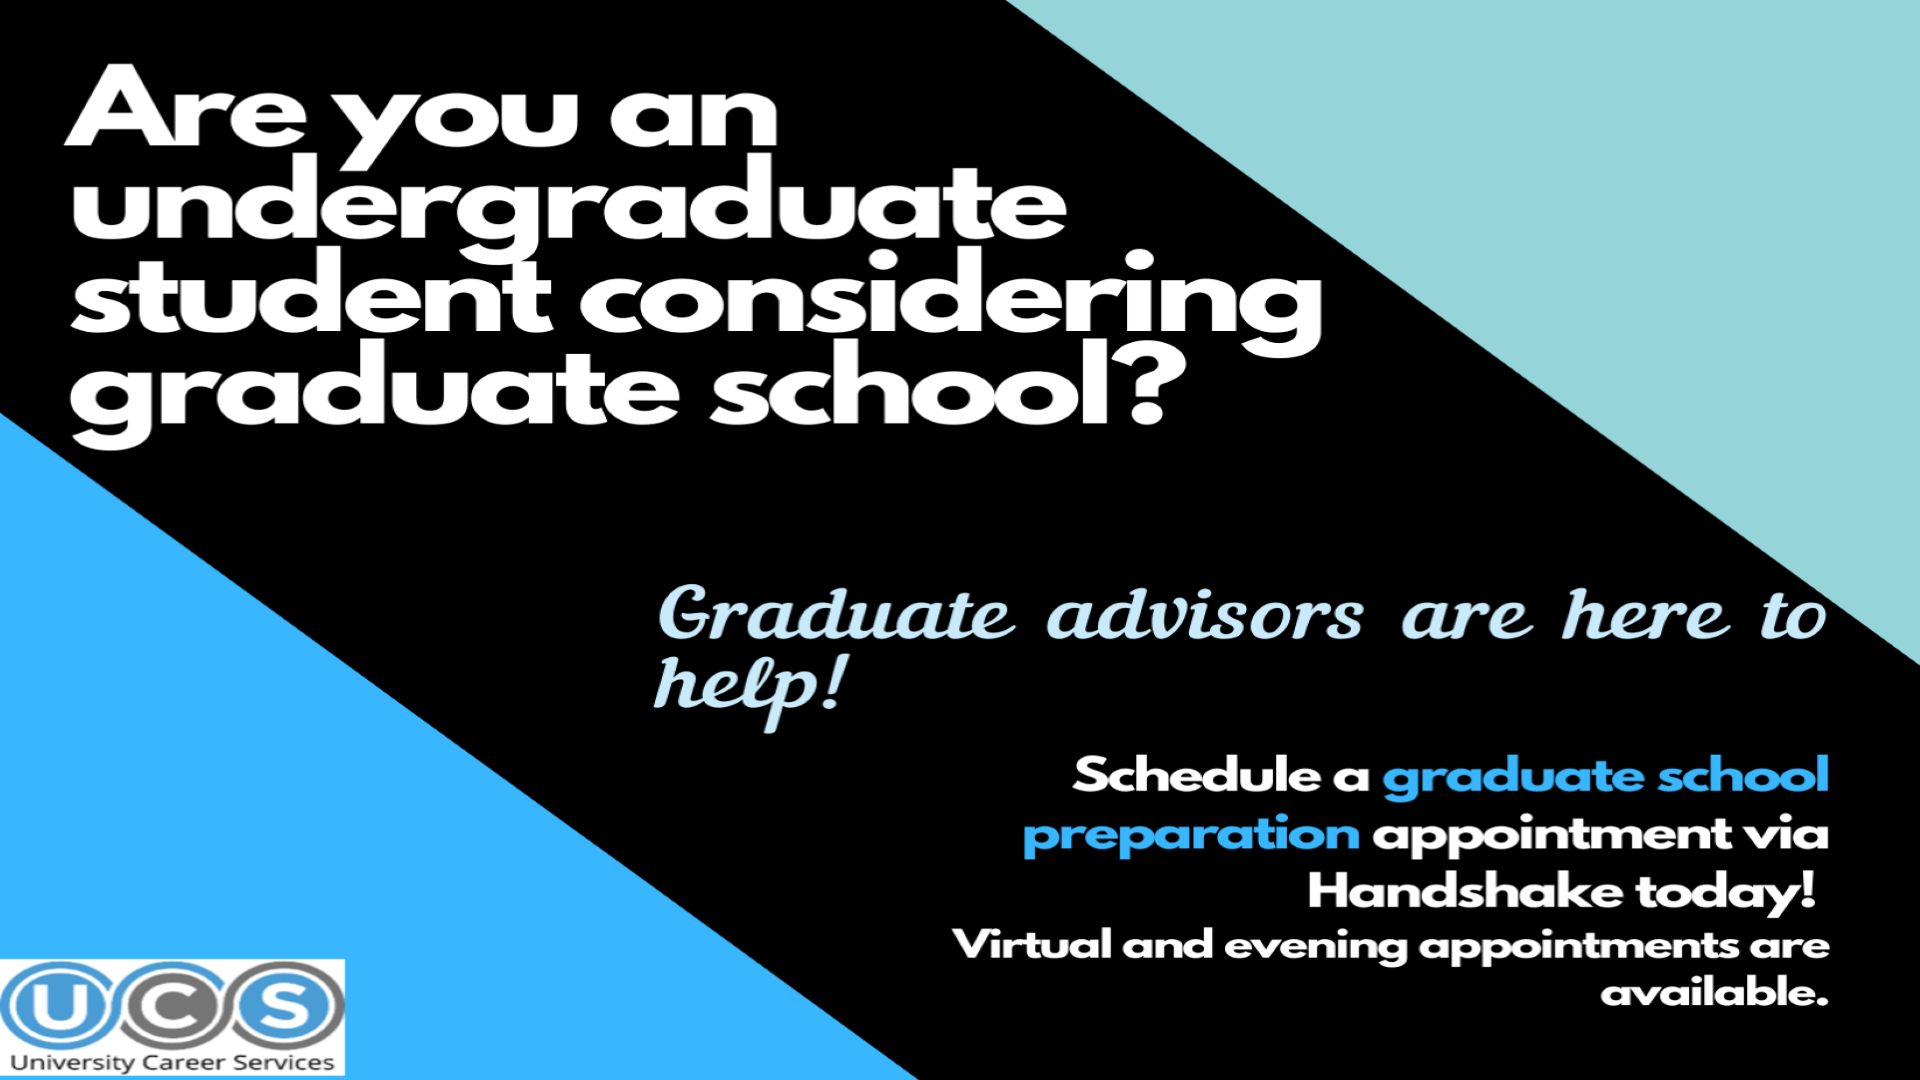 The Pre-Graduate Education Advising Program (PGEAP) is back! Are you a UNC undergrad student considering graduate school?